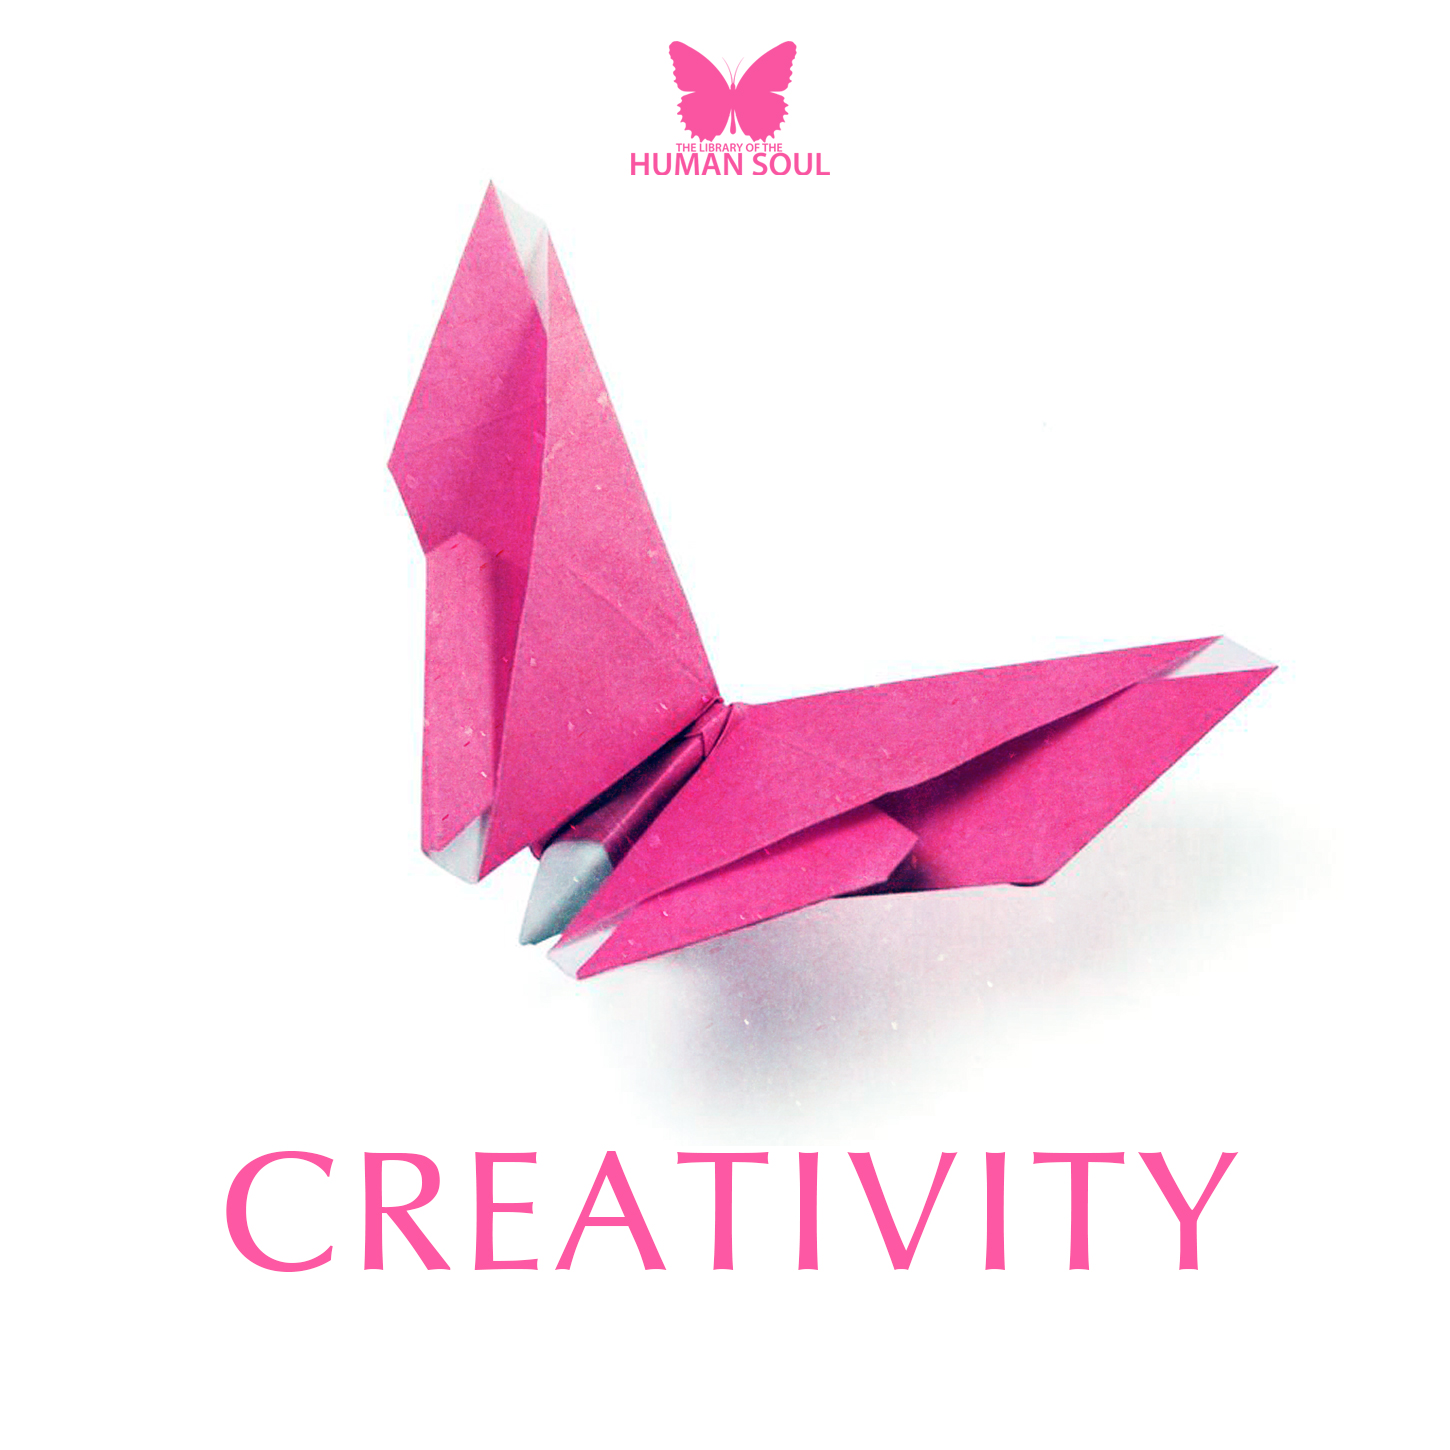 Creativity_cover.jpg